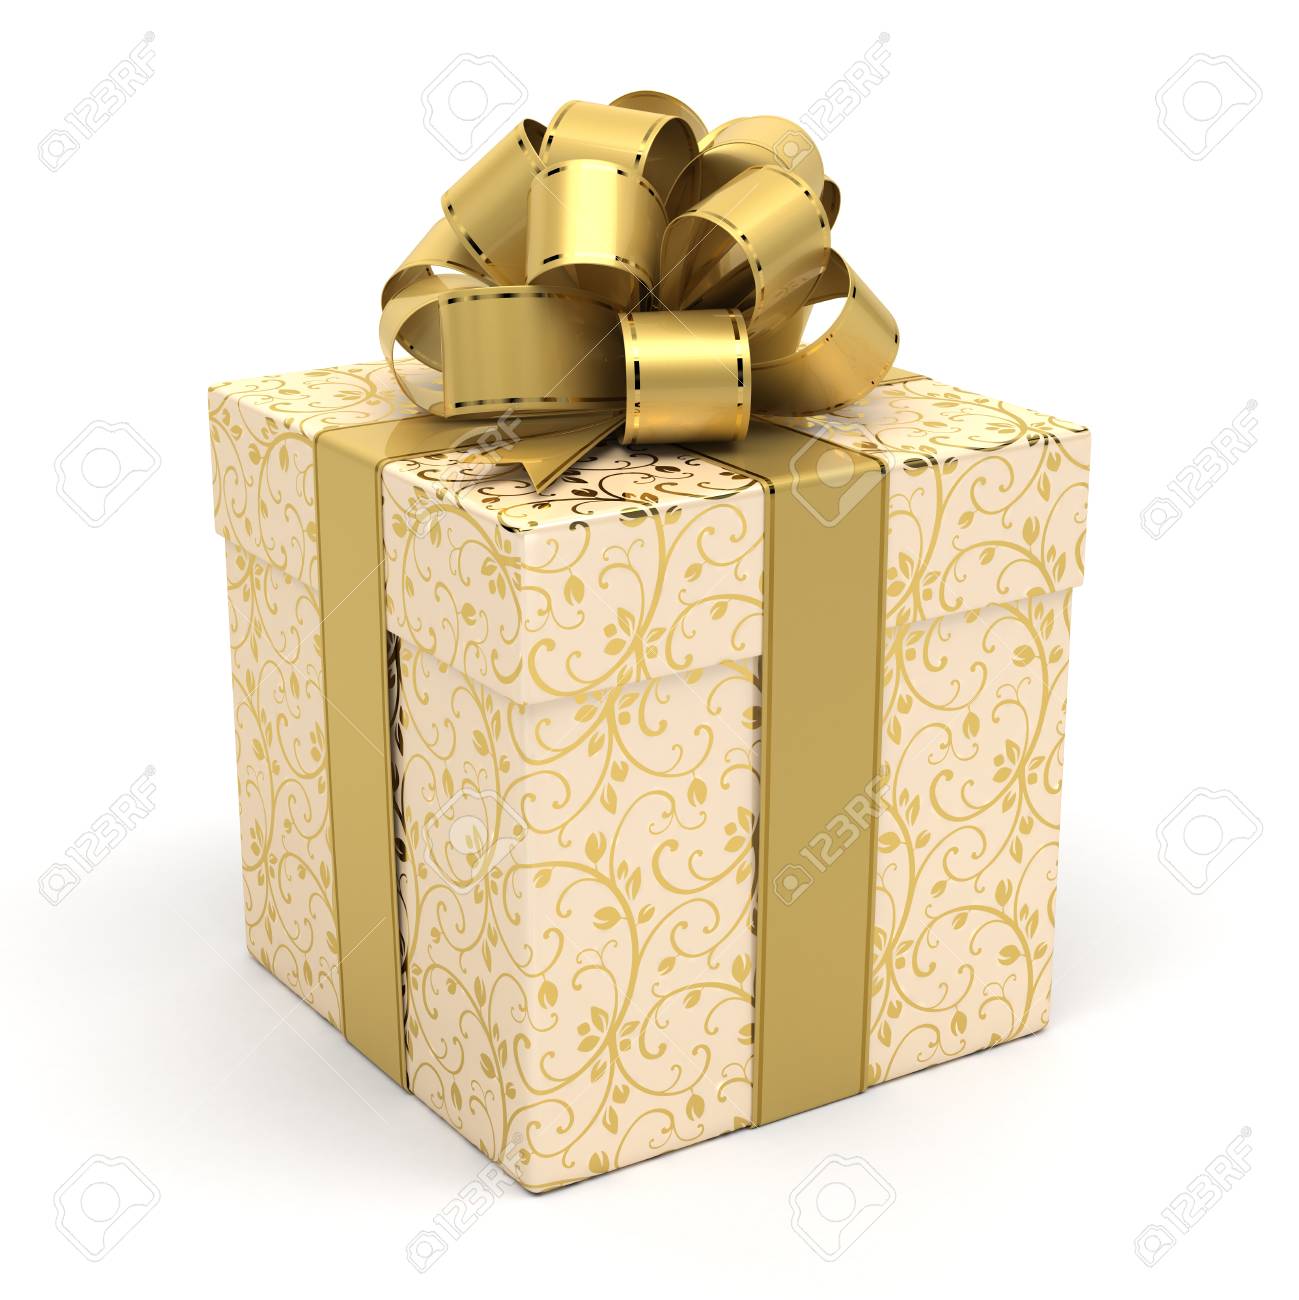 Detail Image Of A Gift Box Nomer 25